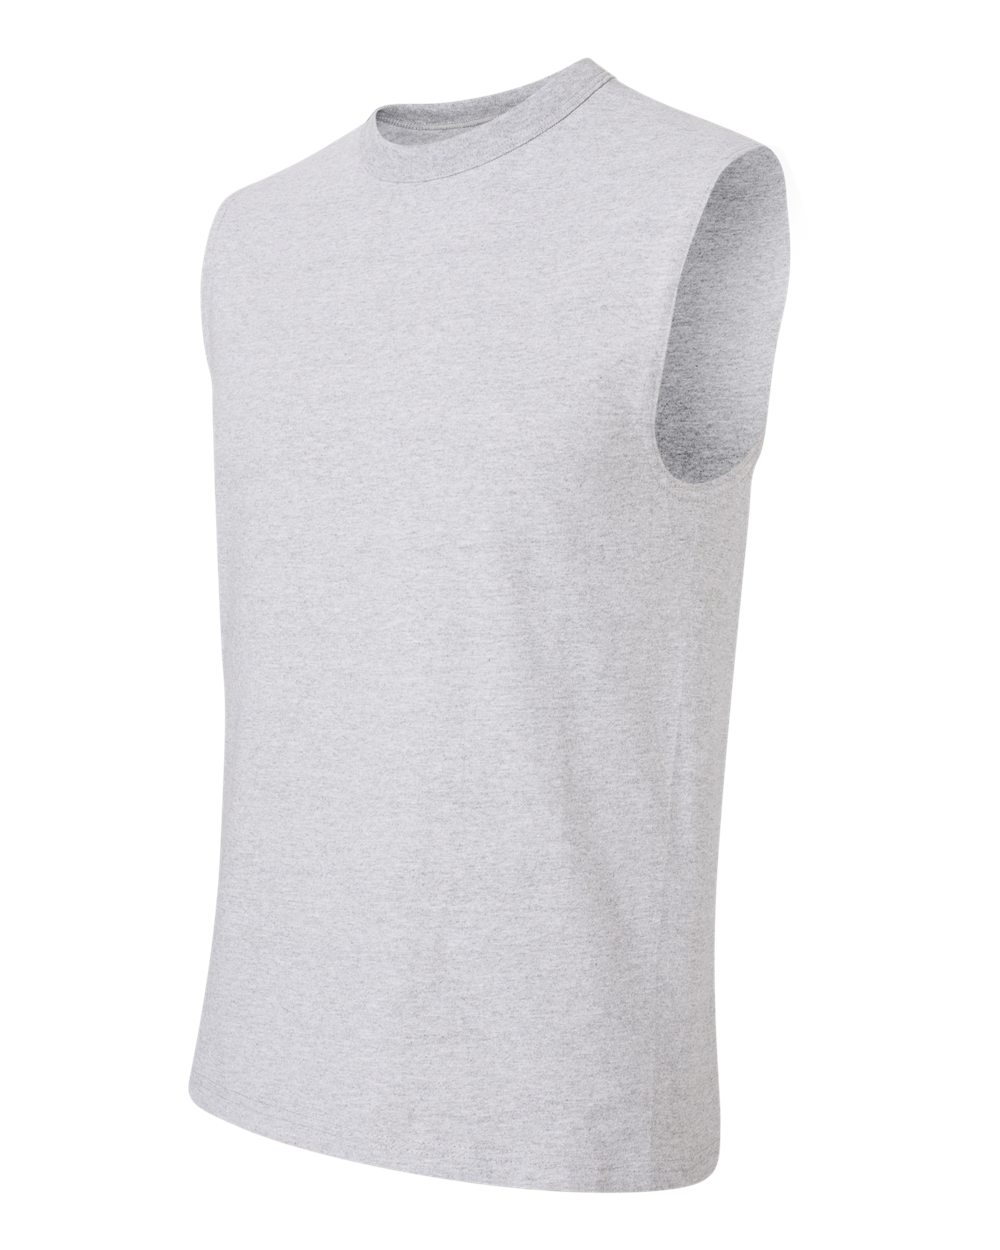 Jerzees 49MR - HiDENSI-T Sleeveless T-Shirt